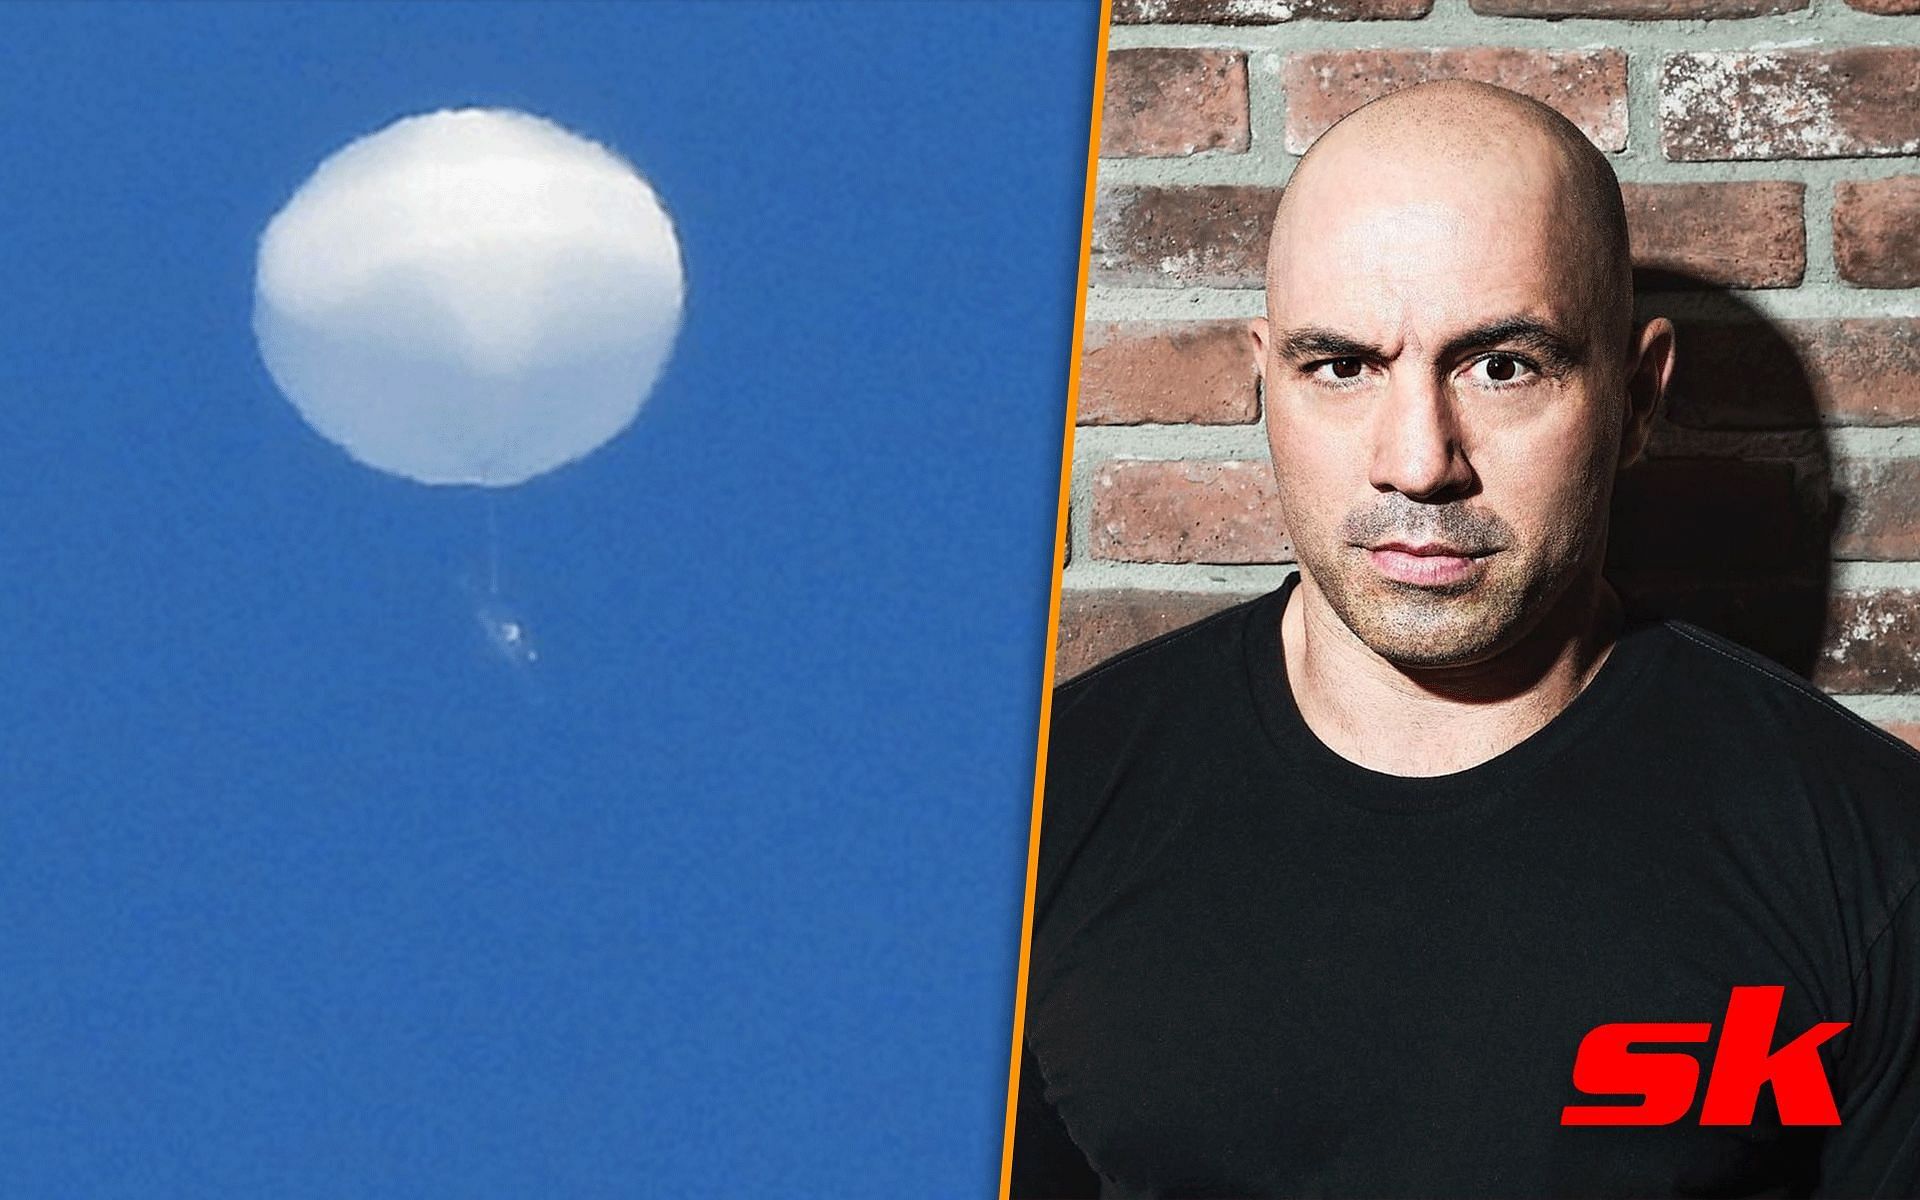 The spy balloon (left) and Joe Rogan (right) [Image credits: @joerogan 